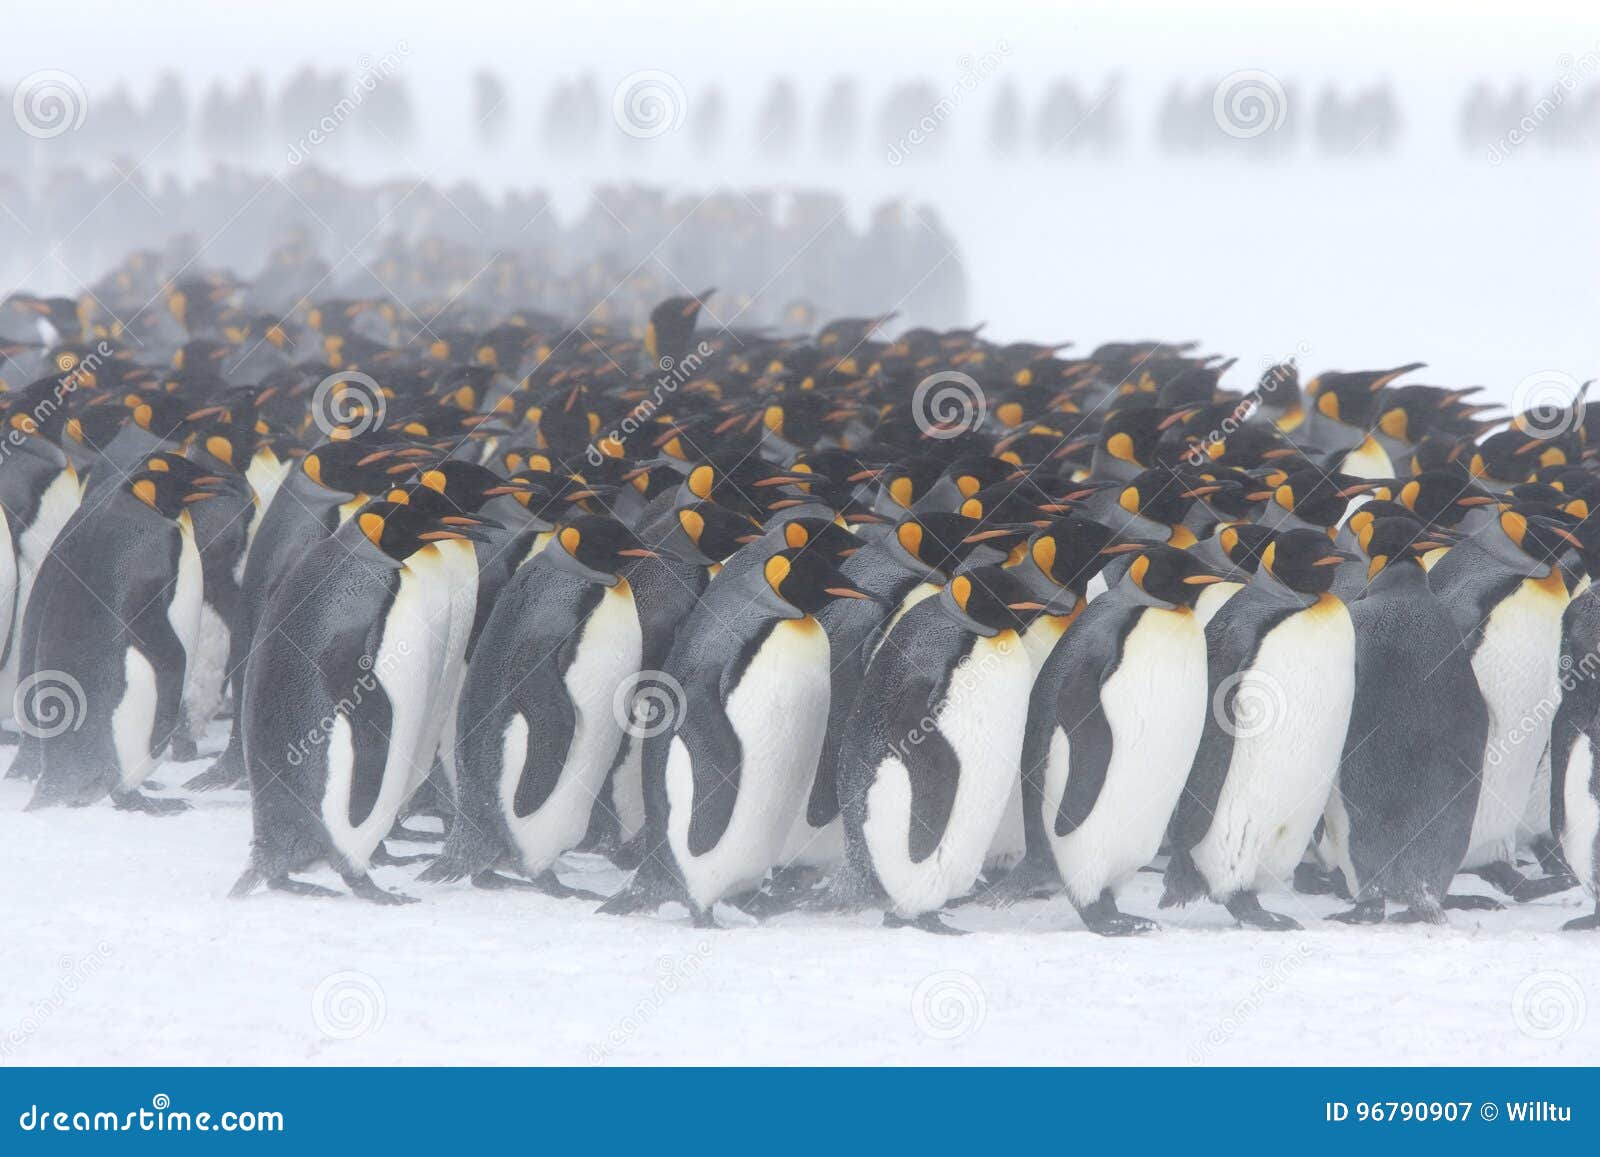 king penguin huddle